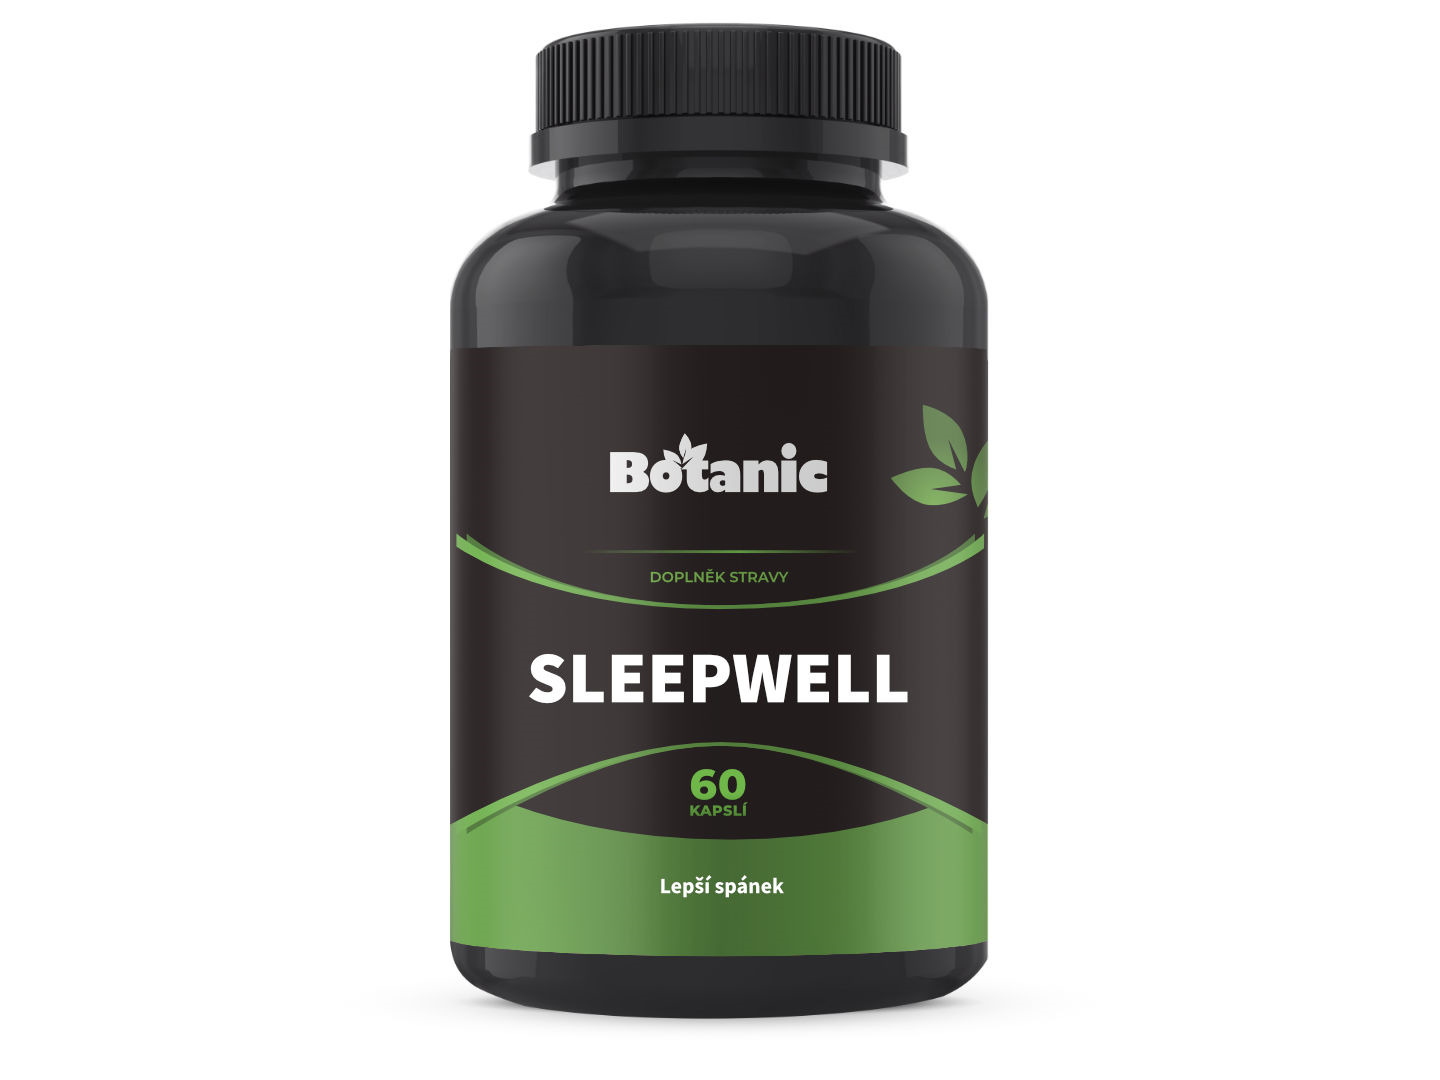 Botanic SleepWell - Pro lepší spánek 60kap.